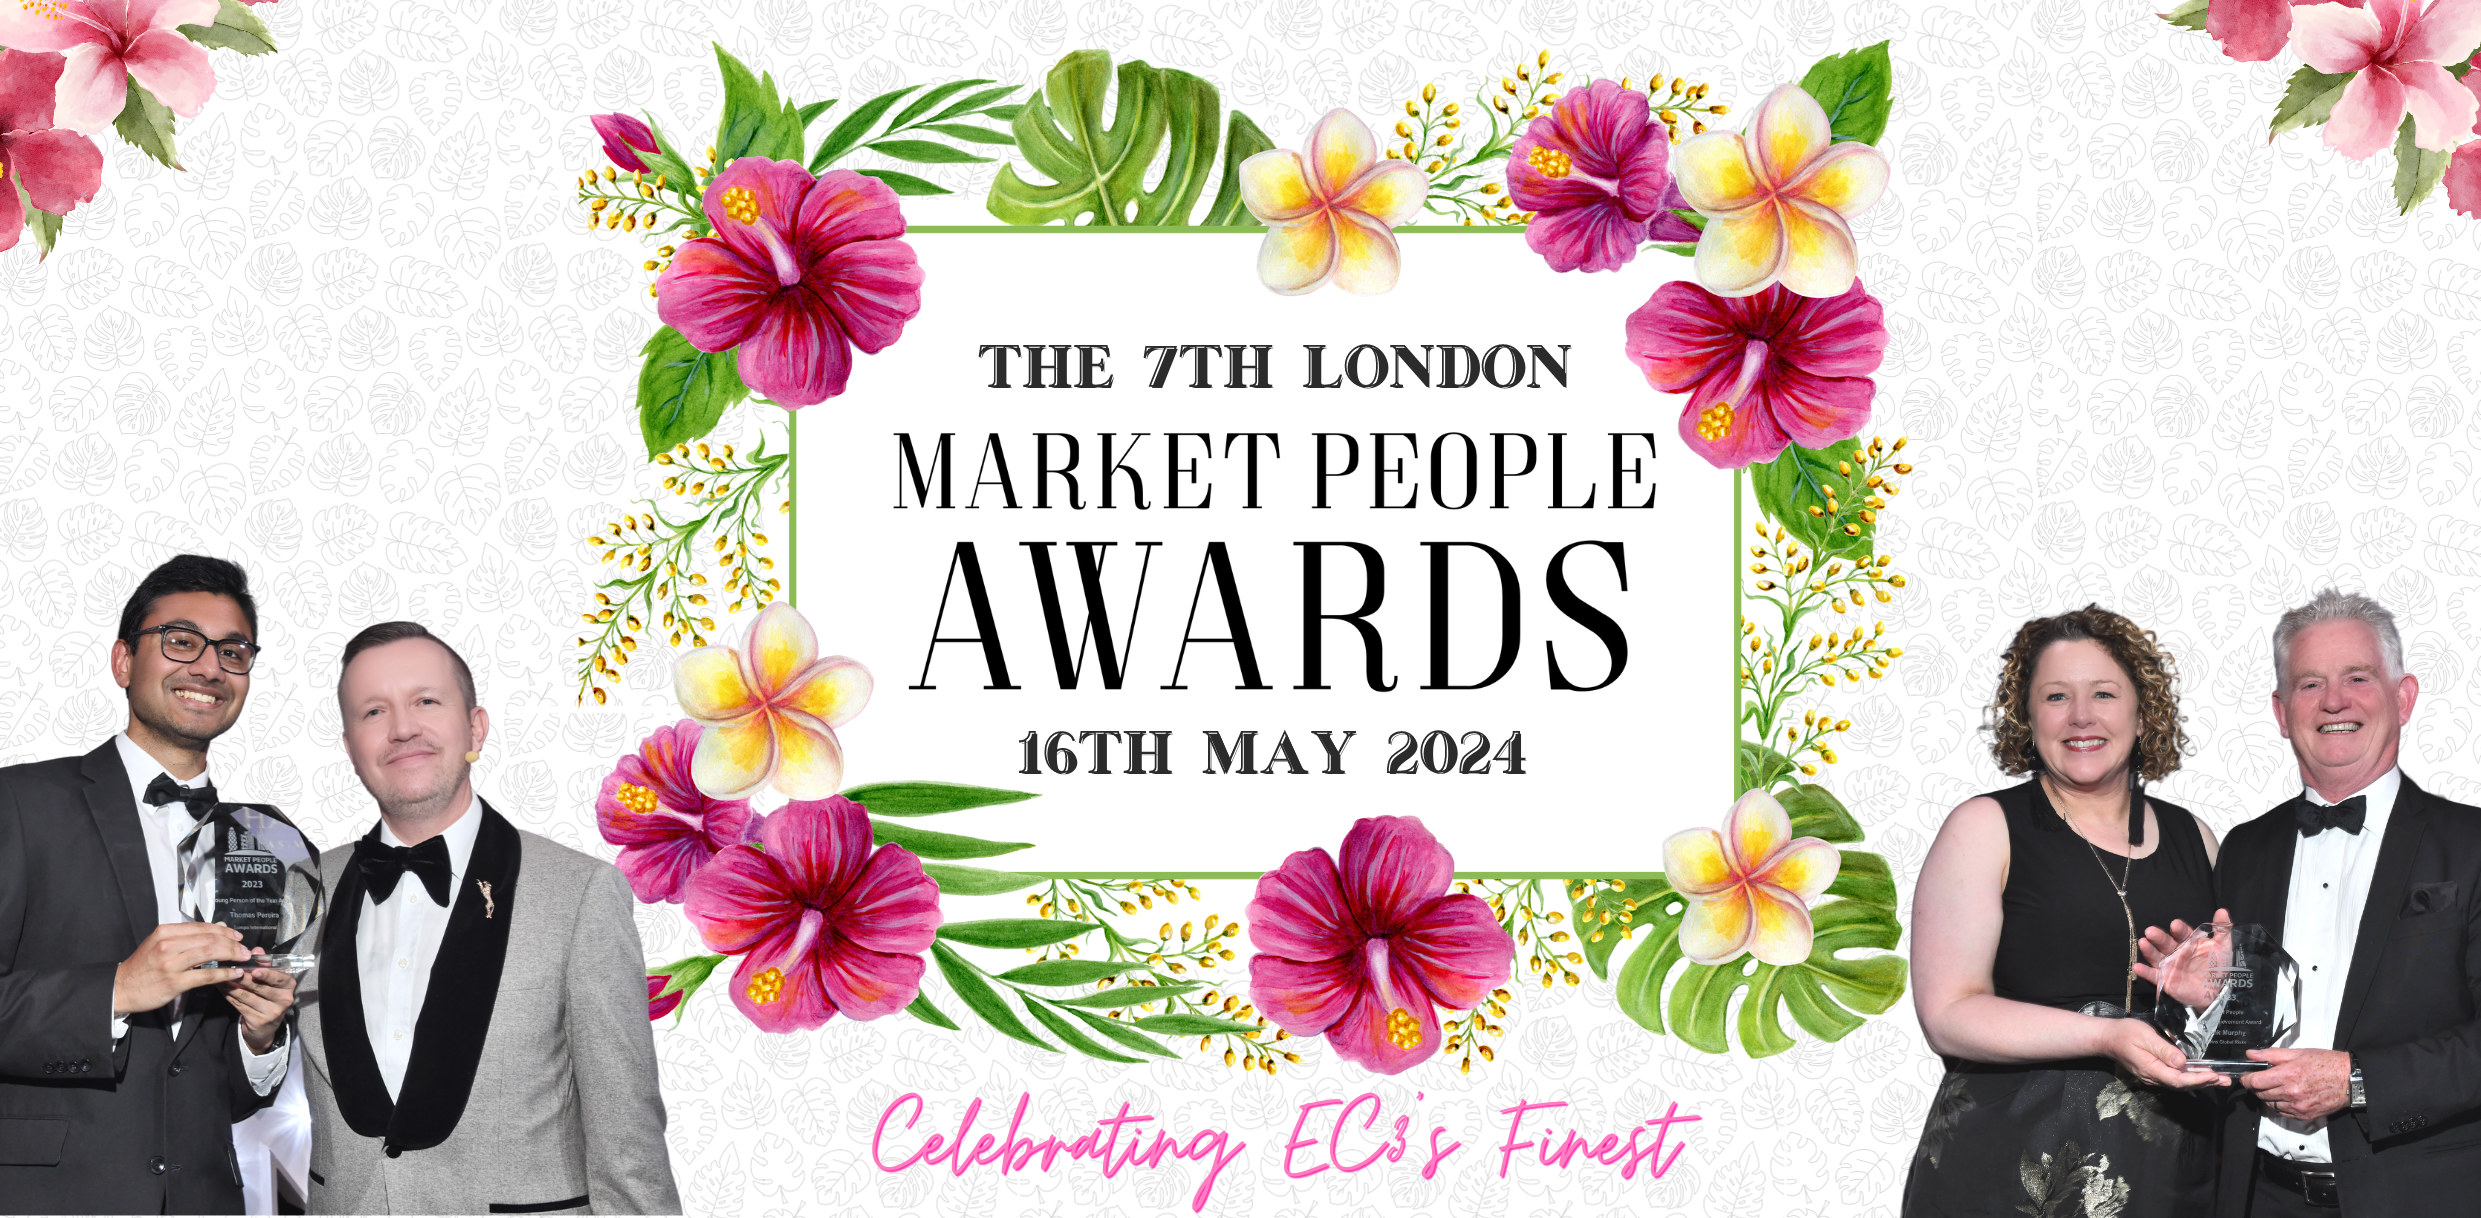 Market People Awards - 16th May 2024